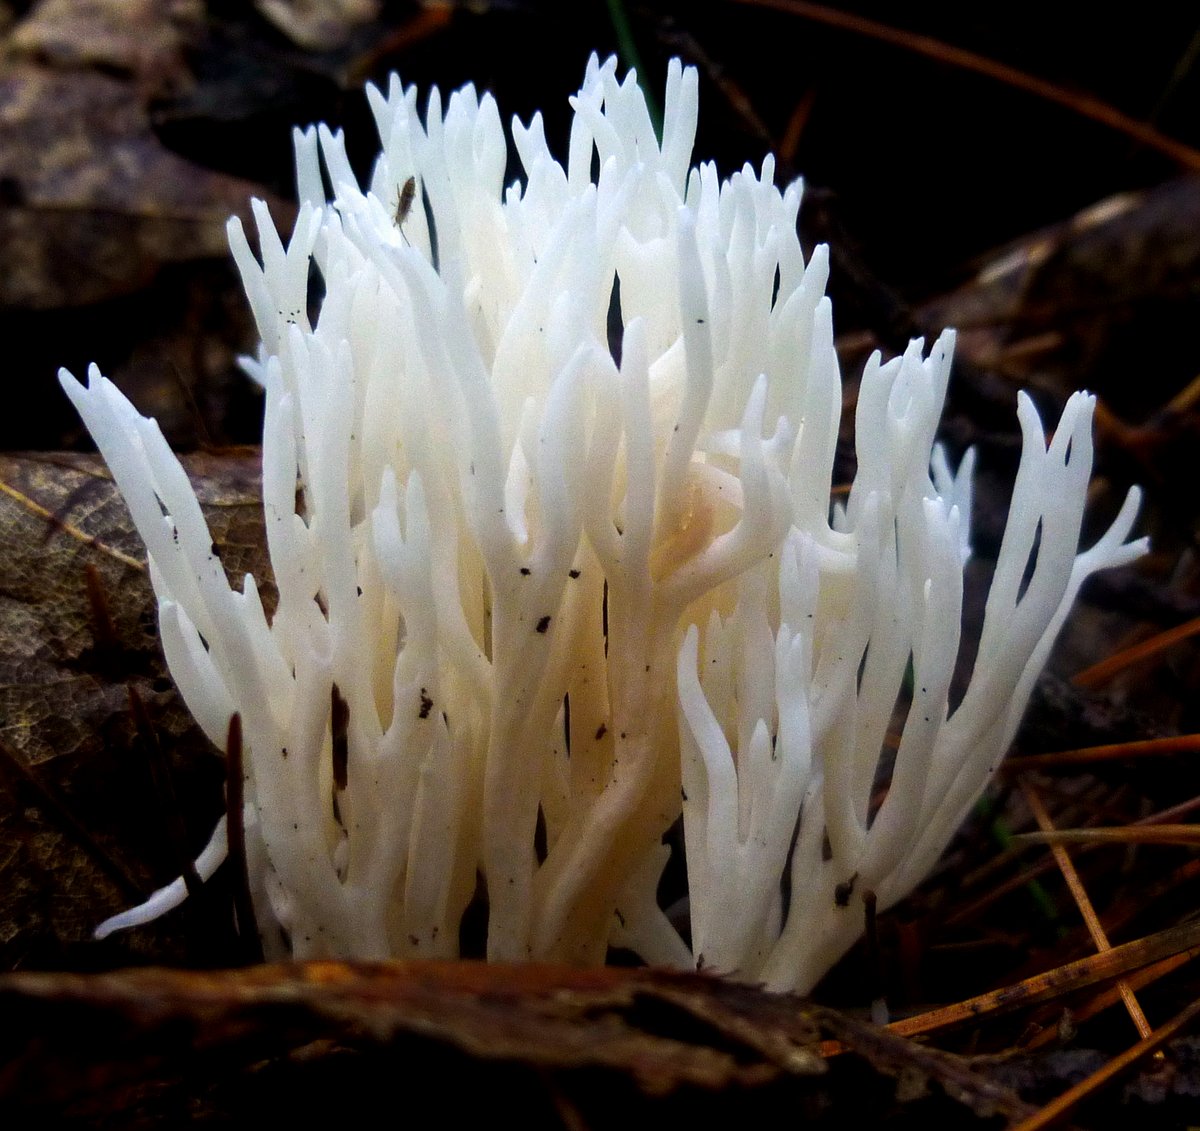 5. White Coral Fungus